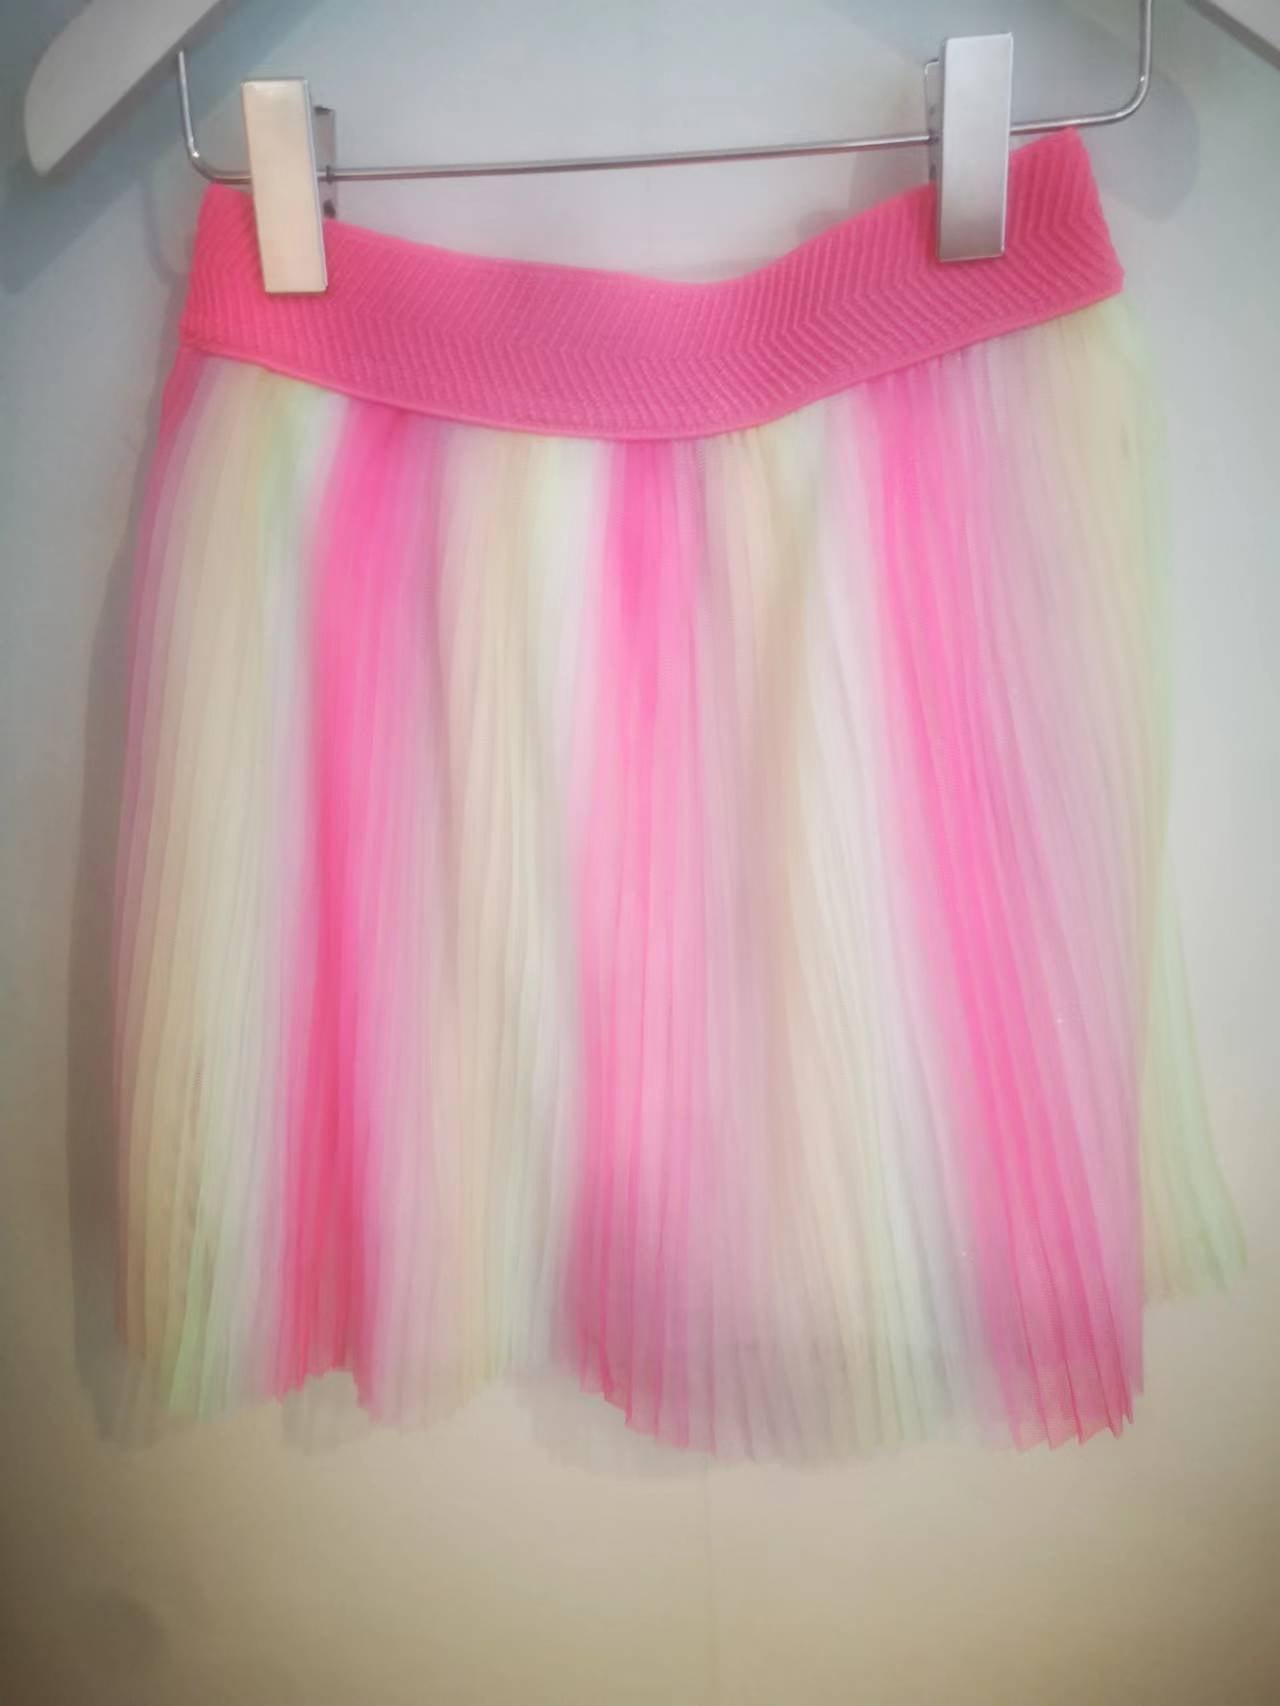 Girls Pink Pleated Skirt